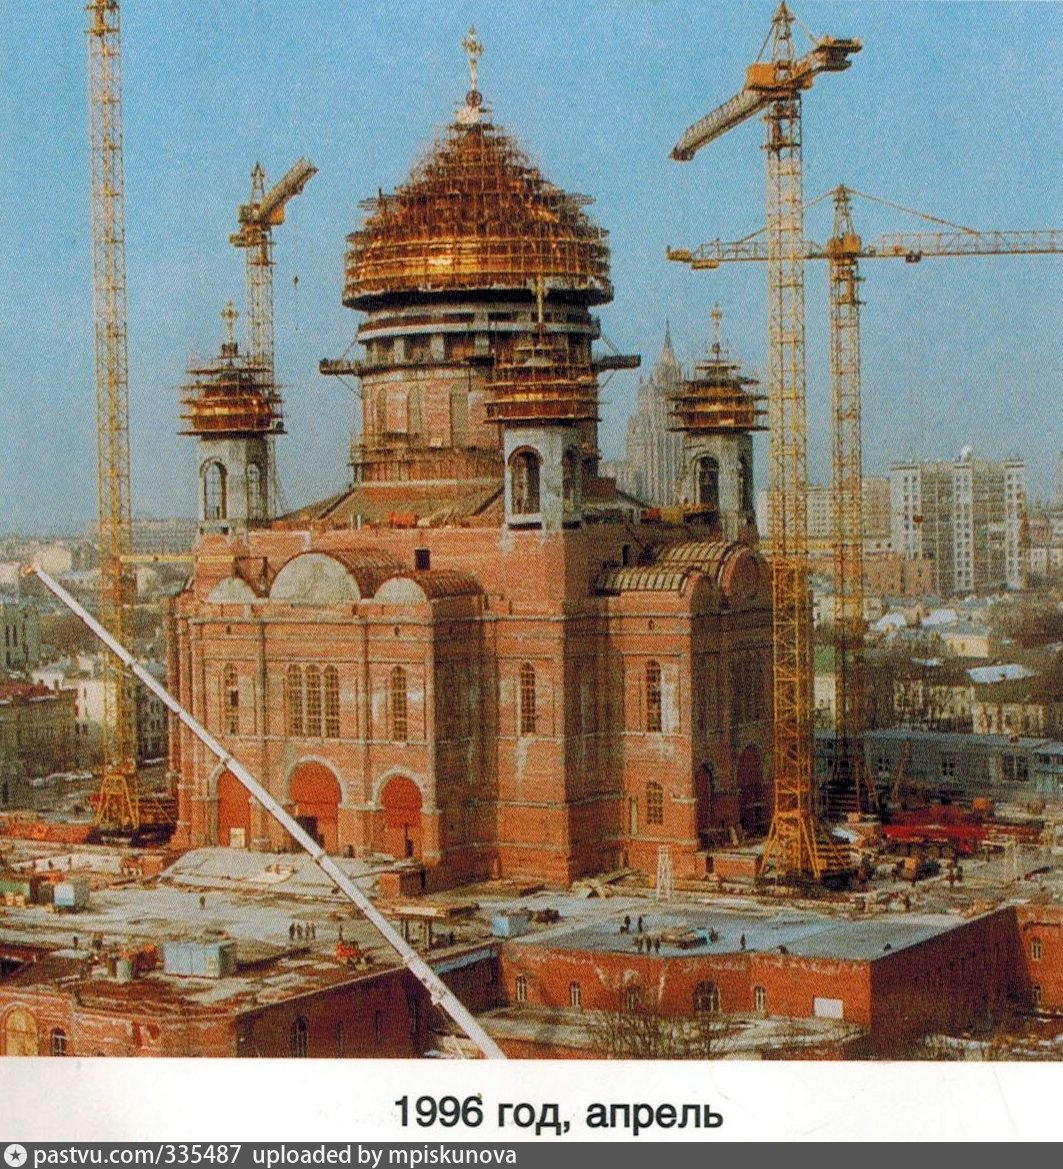 строительство храма христа спасителя в москве